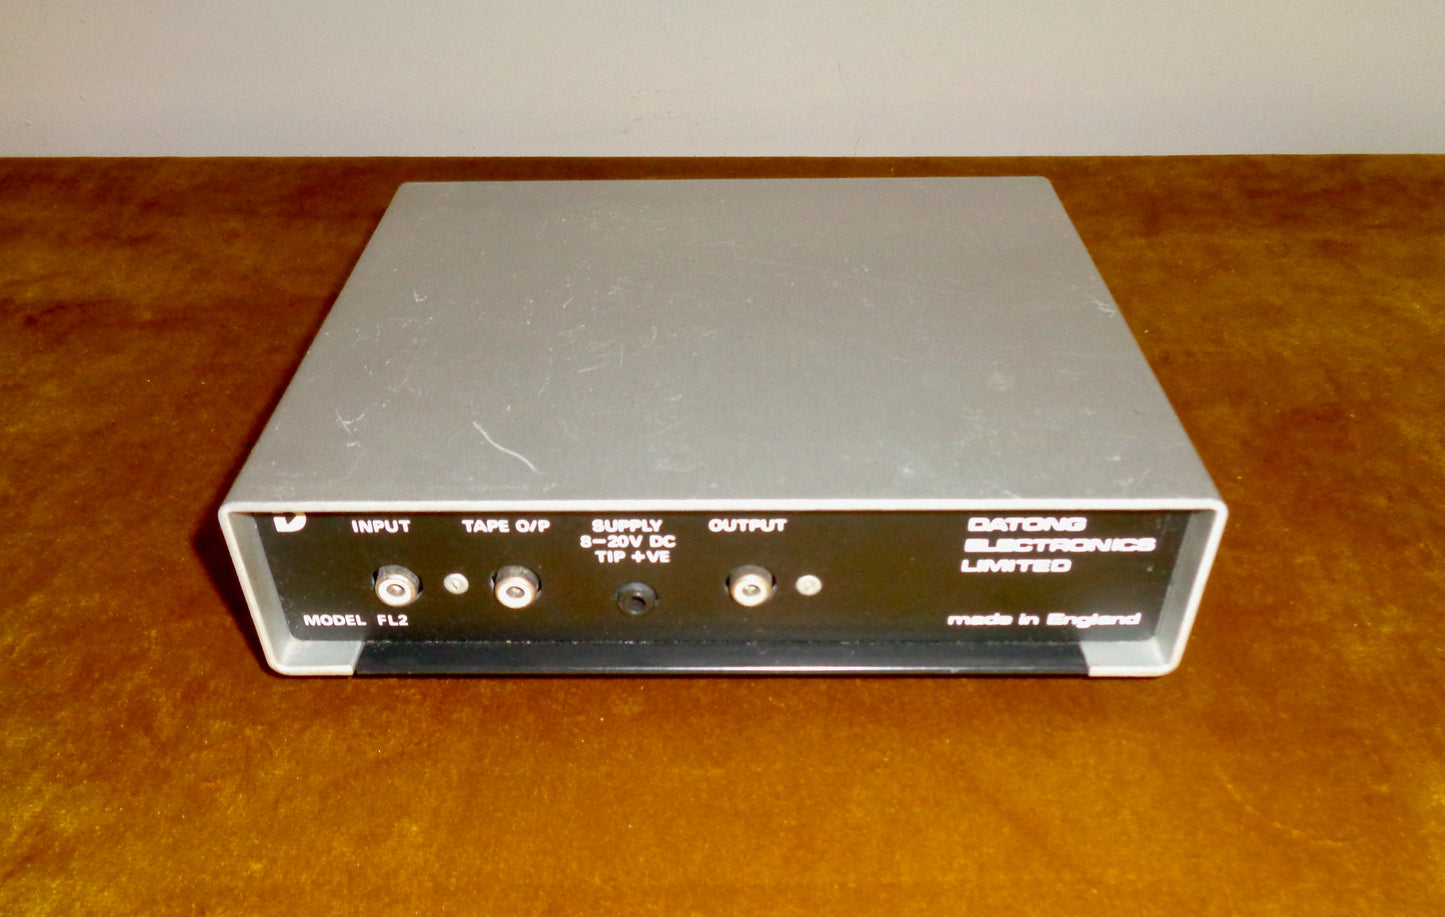 Vintage Datong FL-2 Multi Mode External Audio Signal Filter